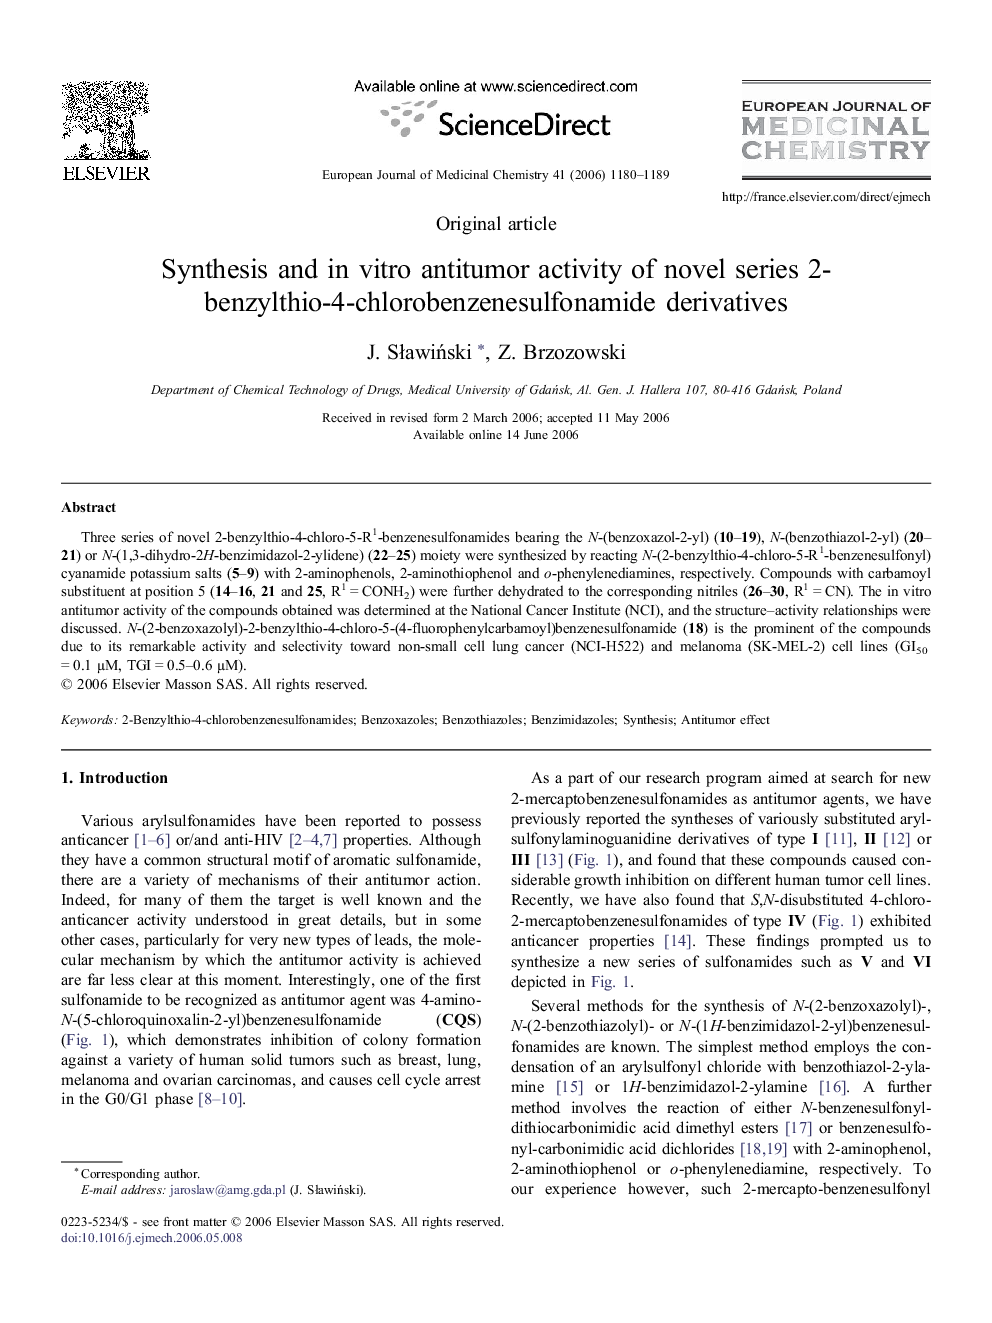 Synthesis and in vitro antitumor activity of novel series 2-benzylthio-4-chlorobenzenesulfonamide derivatives